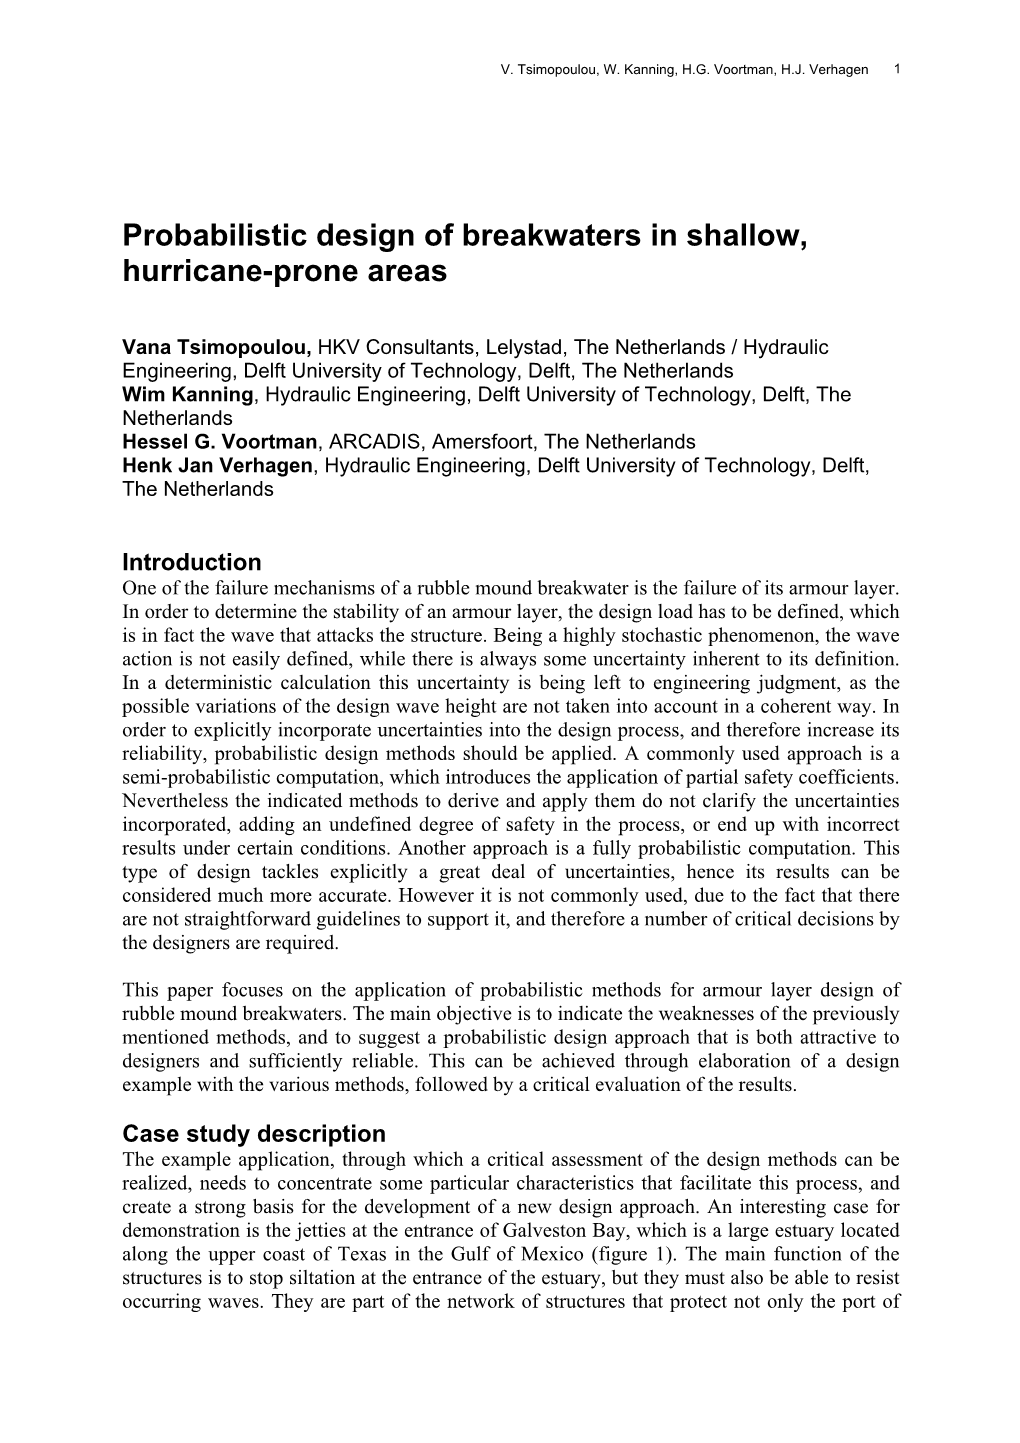 Probabilistic Design of Breakwaters in Shallow, Hurricane-Prone Areas